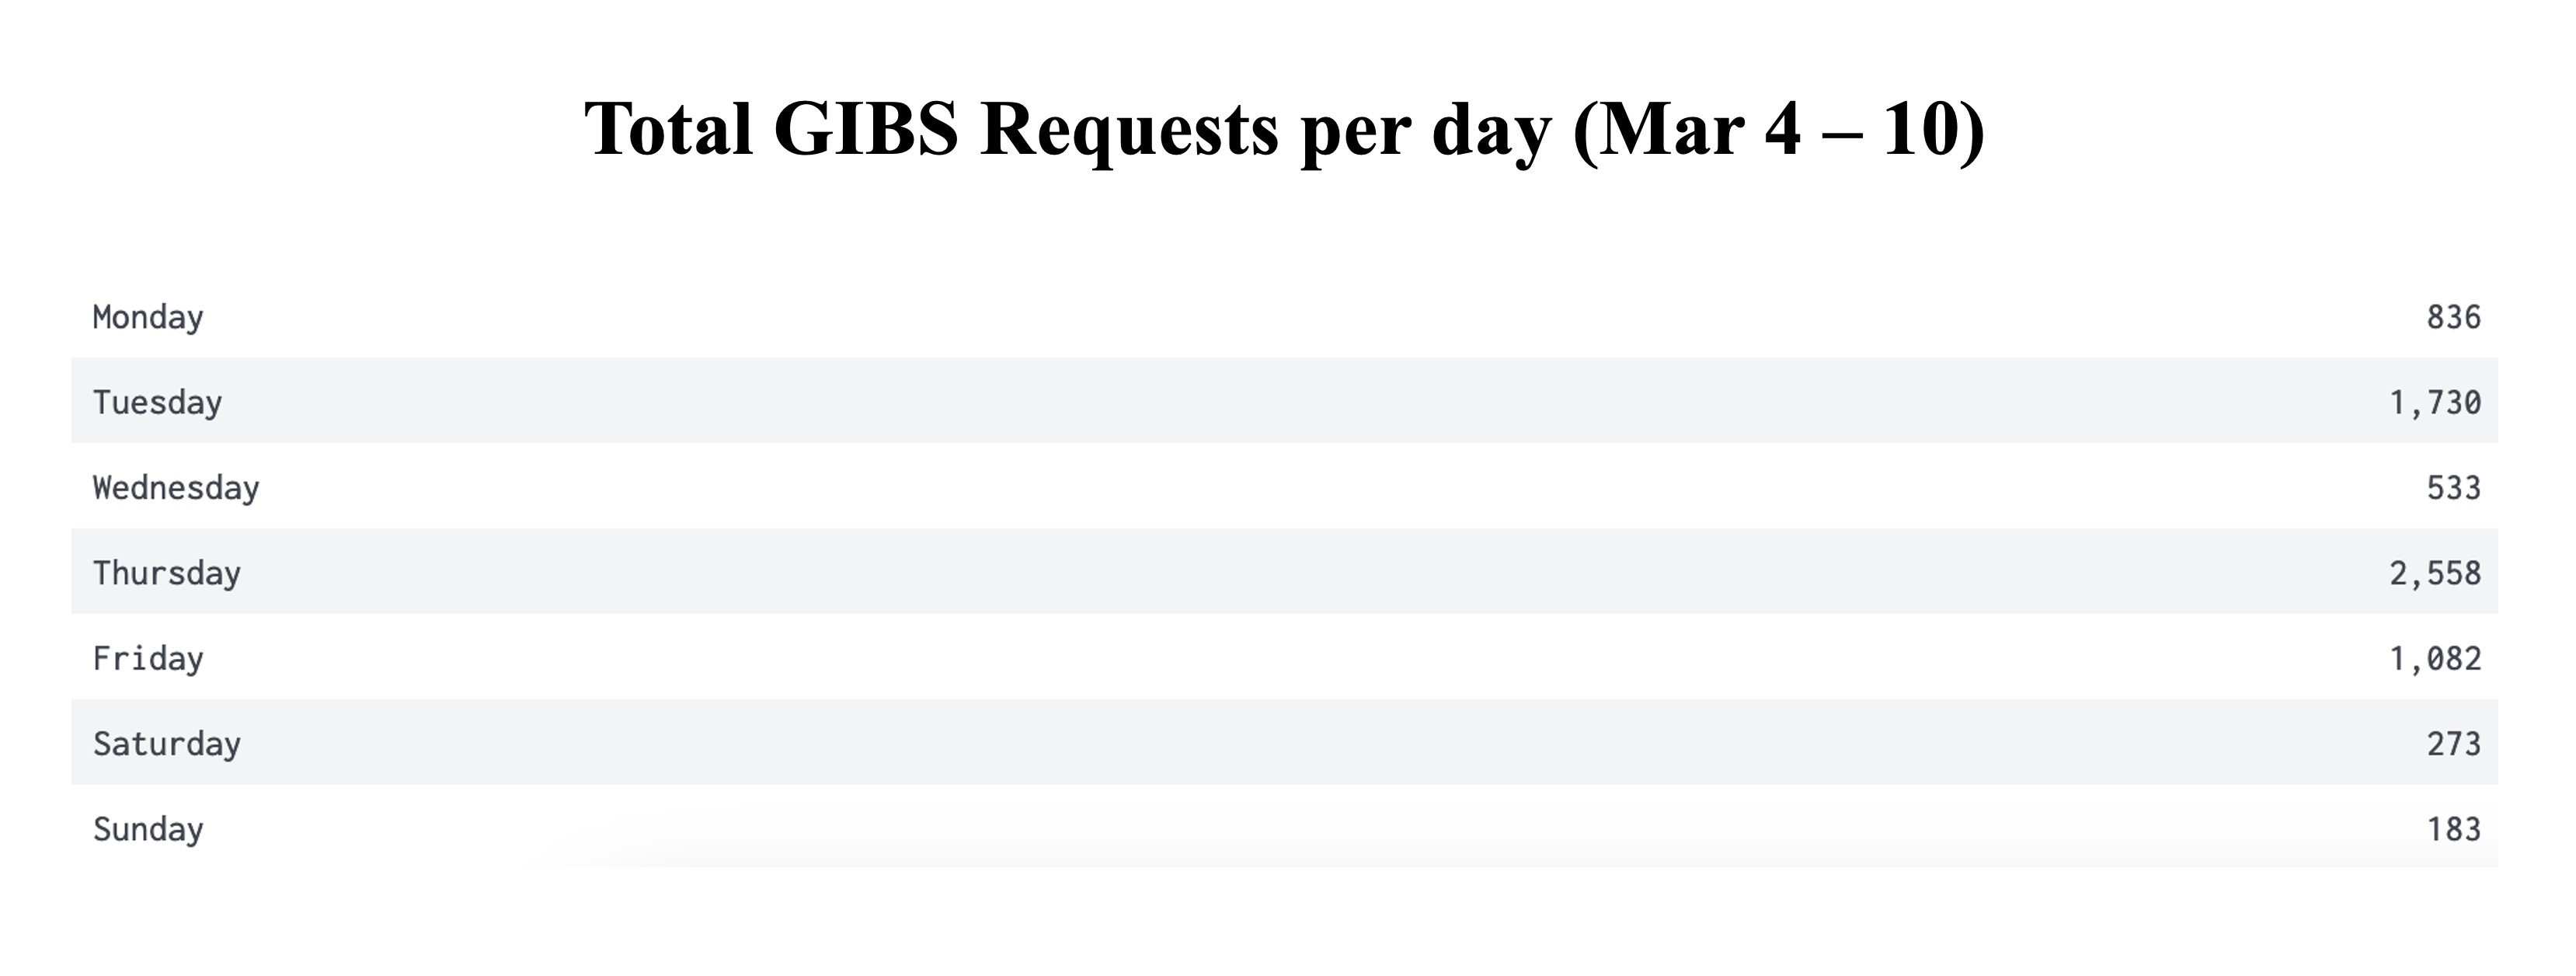 GIBS_Weekly_Metrics_2_March_11